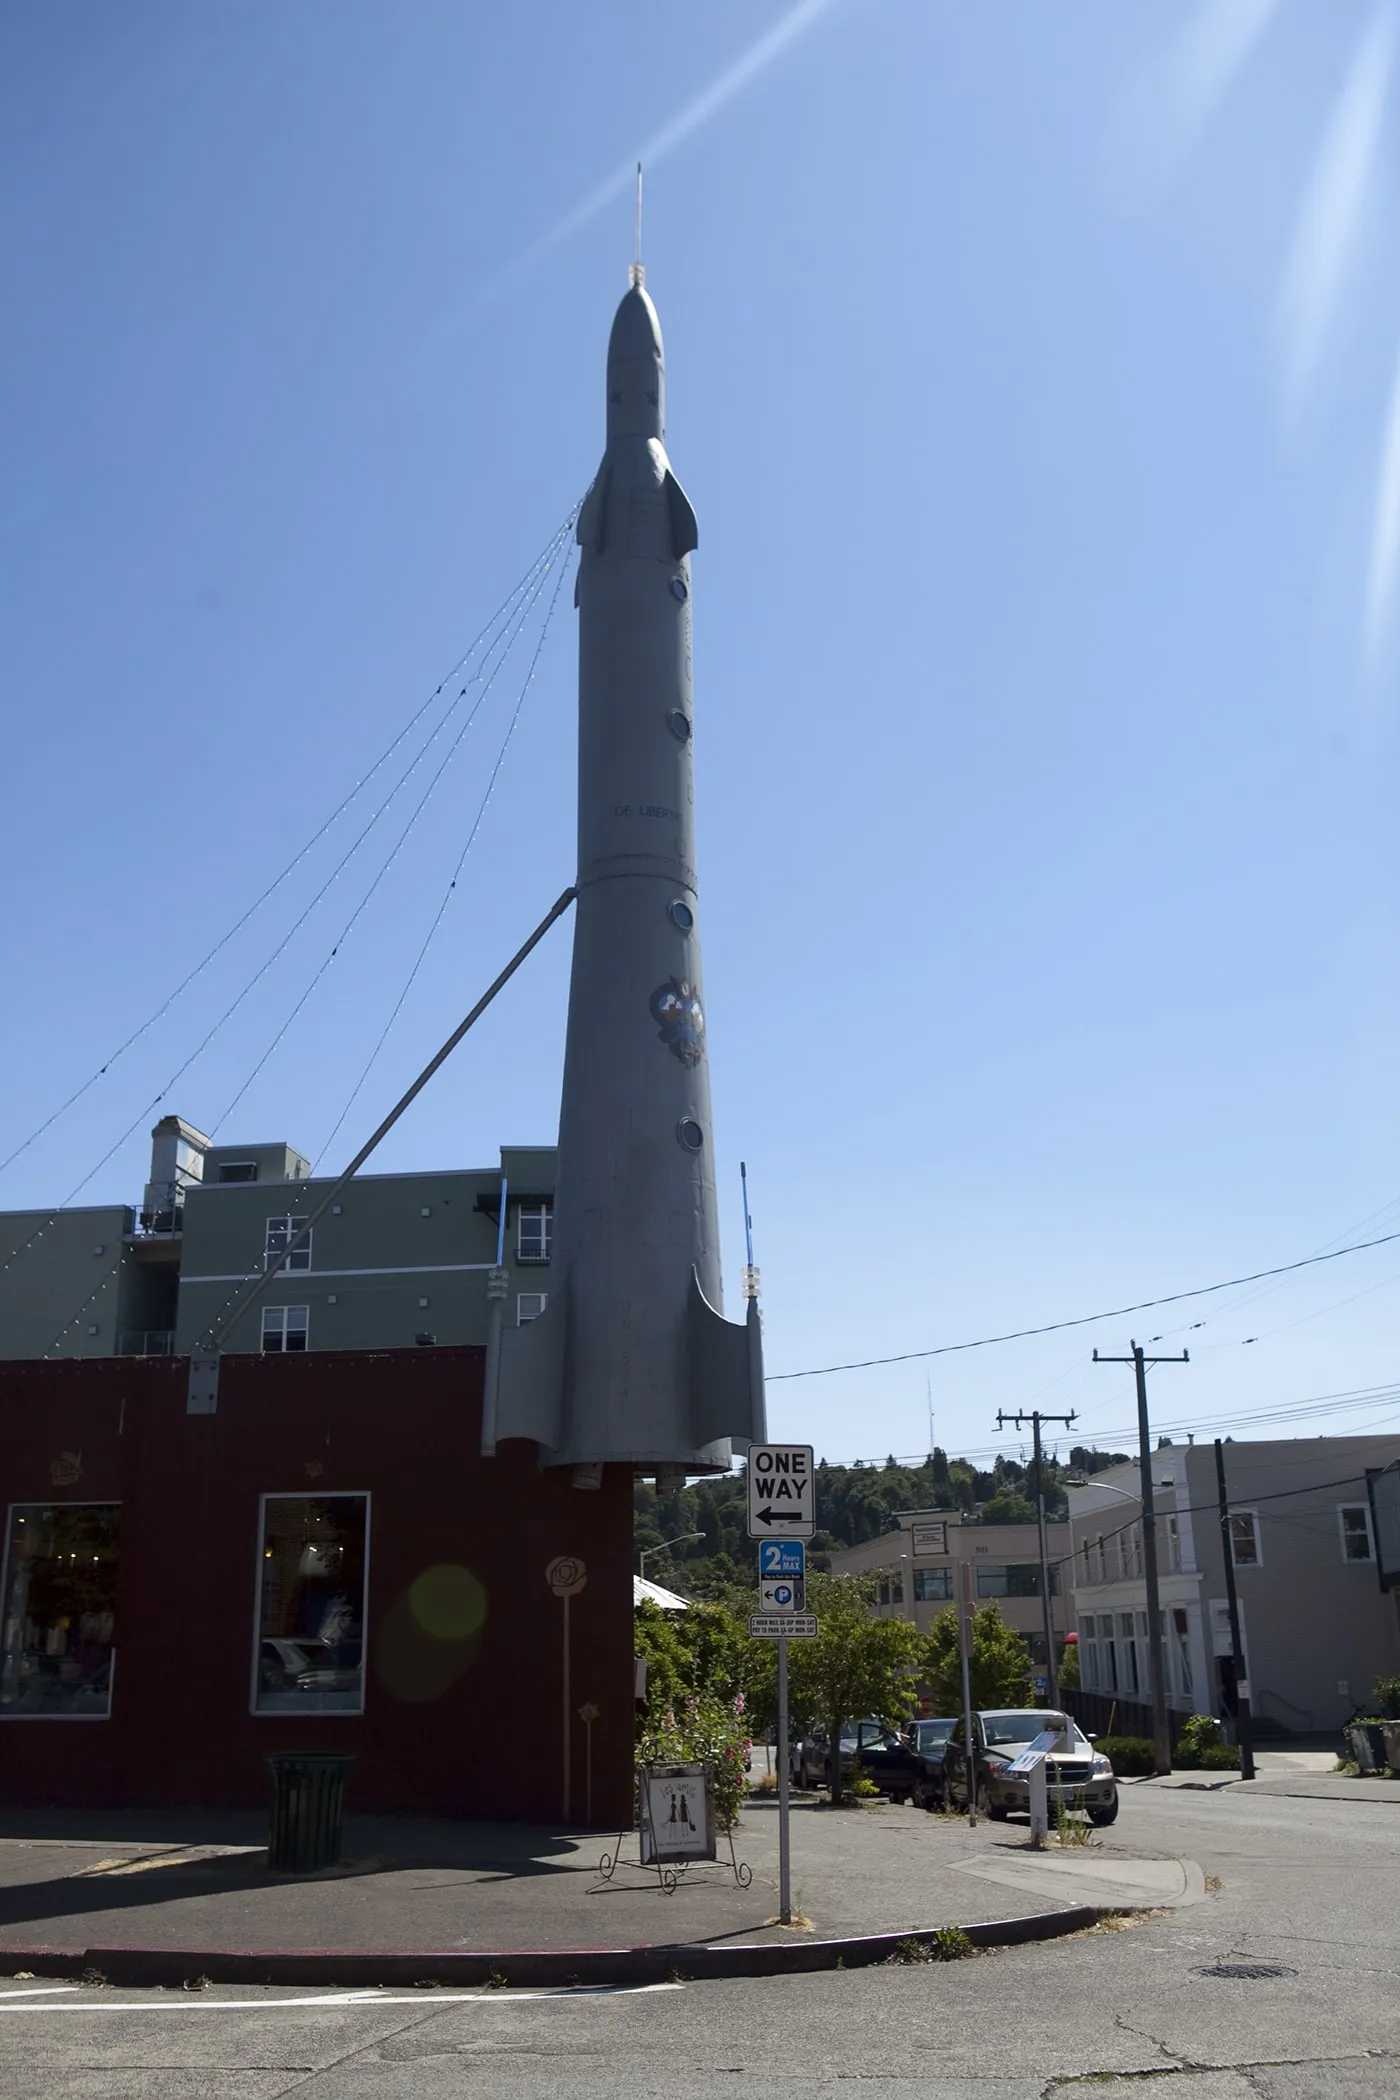 The Fremont Rocket, a roadside attraction in Seattle, Washington.